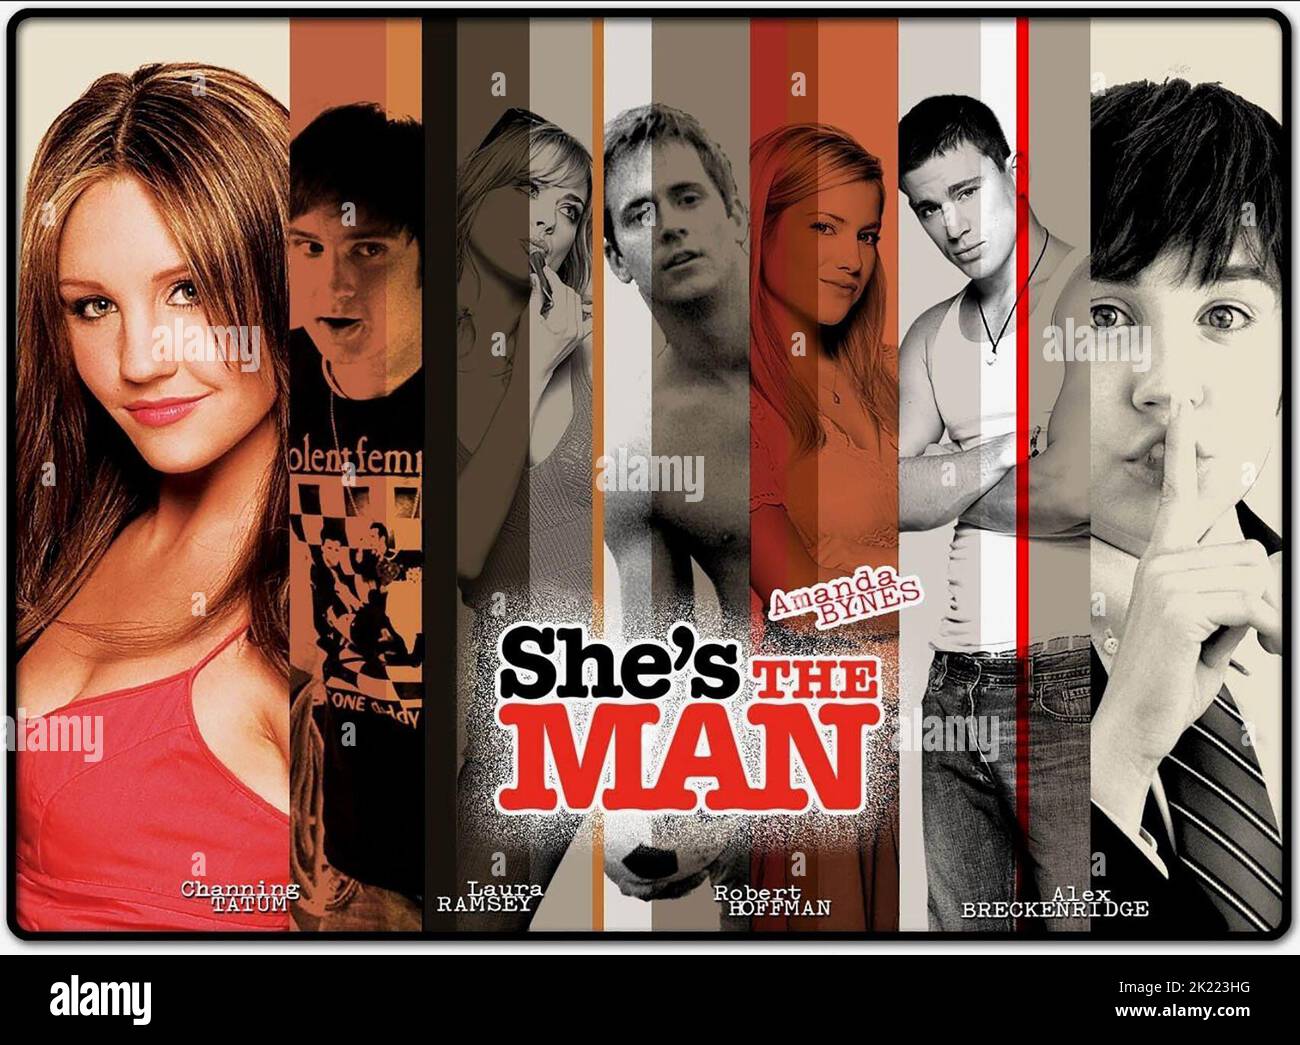 She s easy. Она мужчина 2006. Она — мужчина (2005).